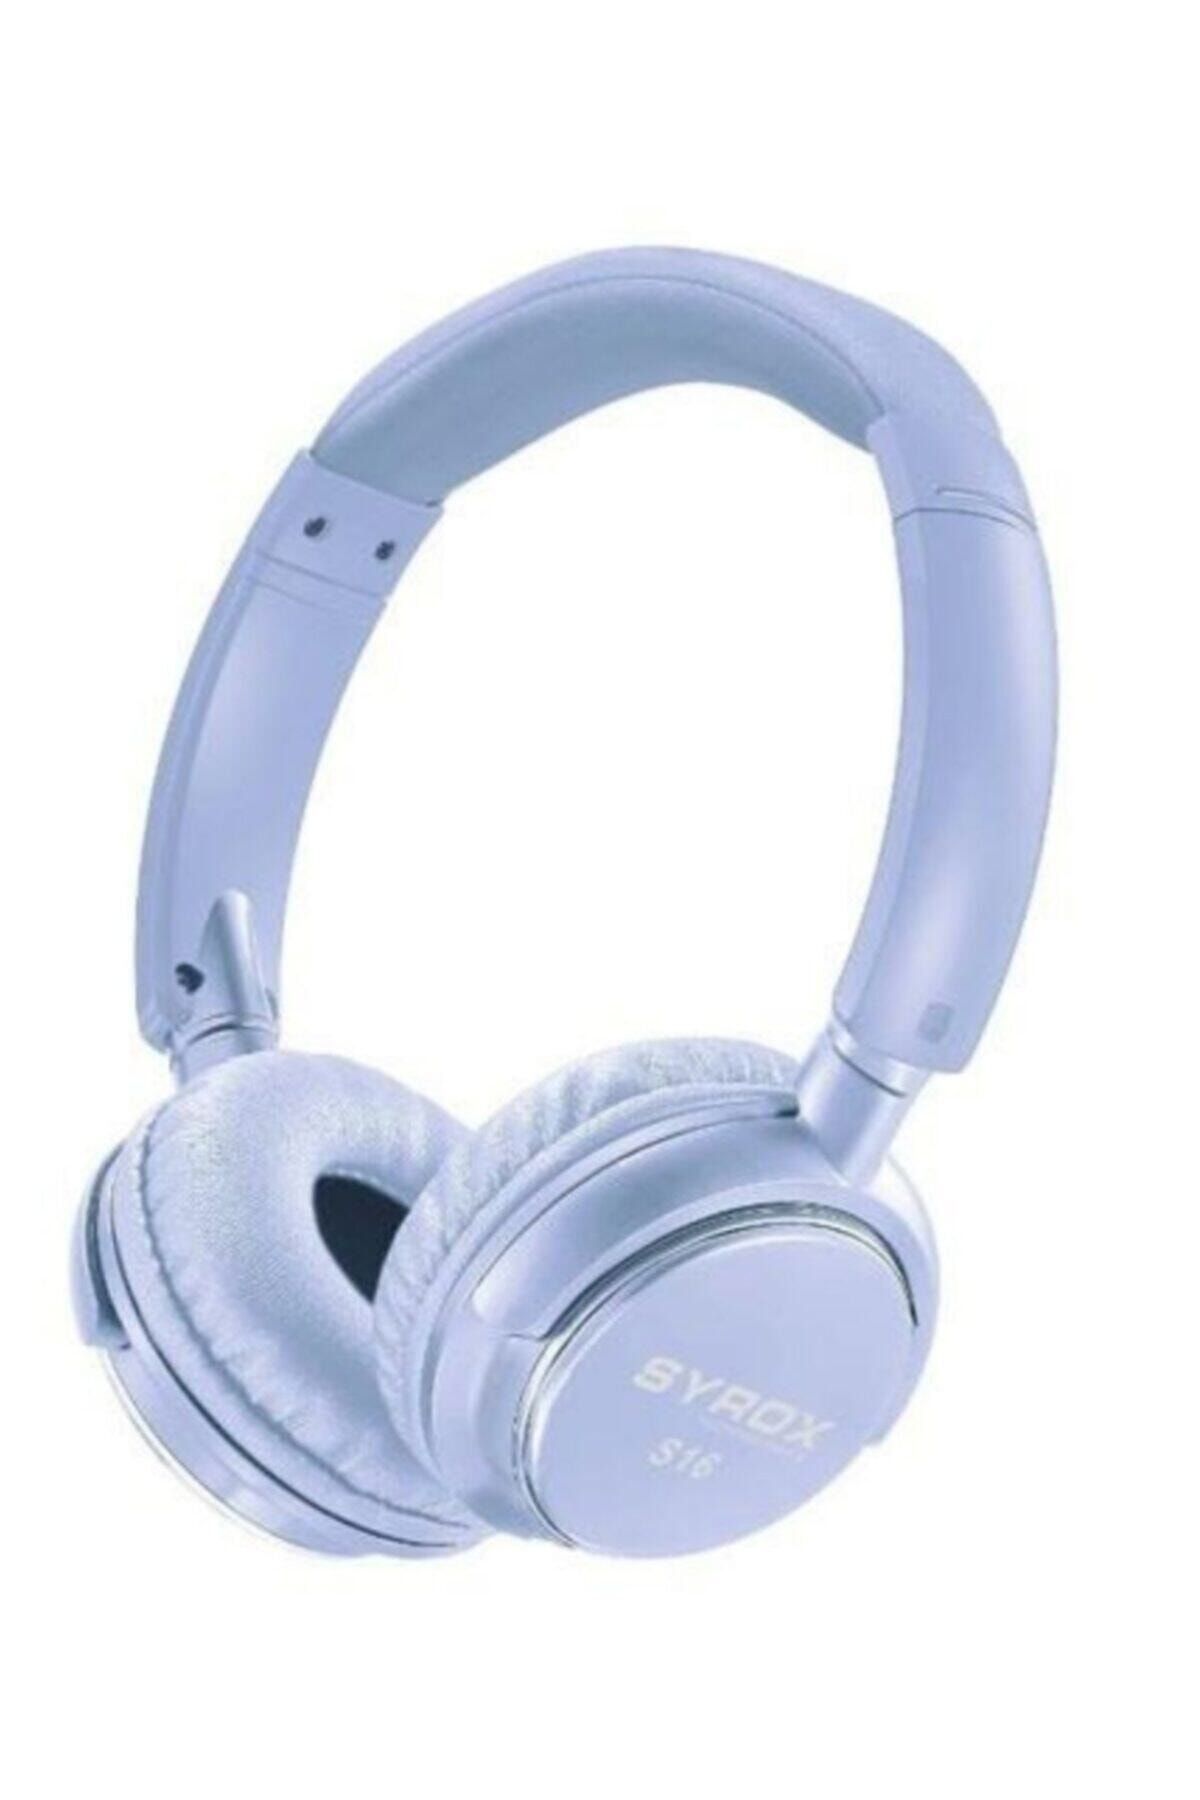 Syrox Mavi S16 Kablosuz Hafıza Kartlı Bluetooth Kulak Üstü Kulaklık